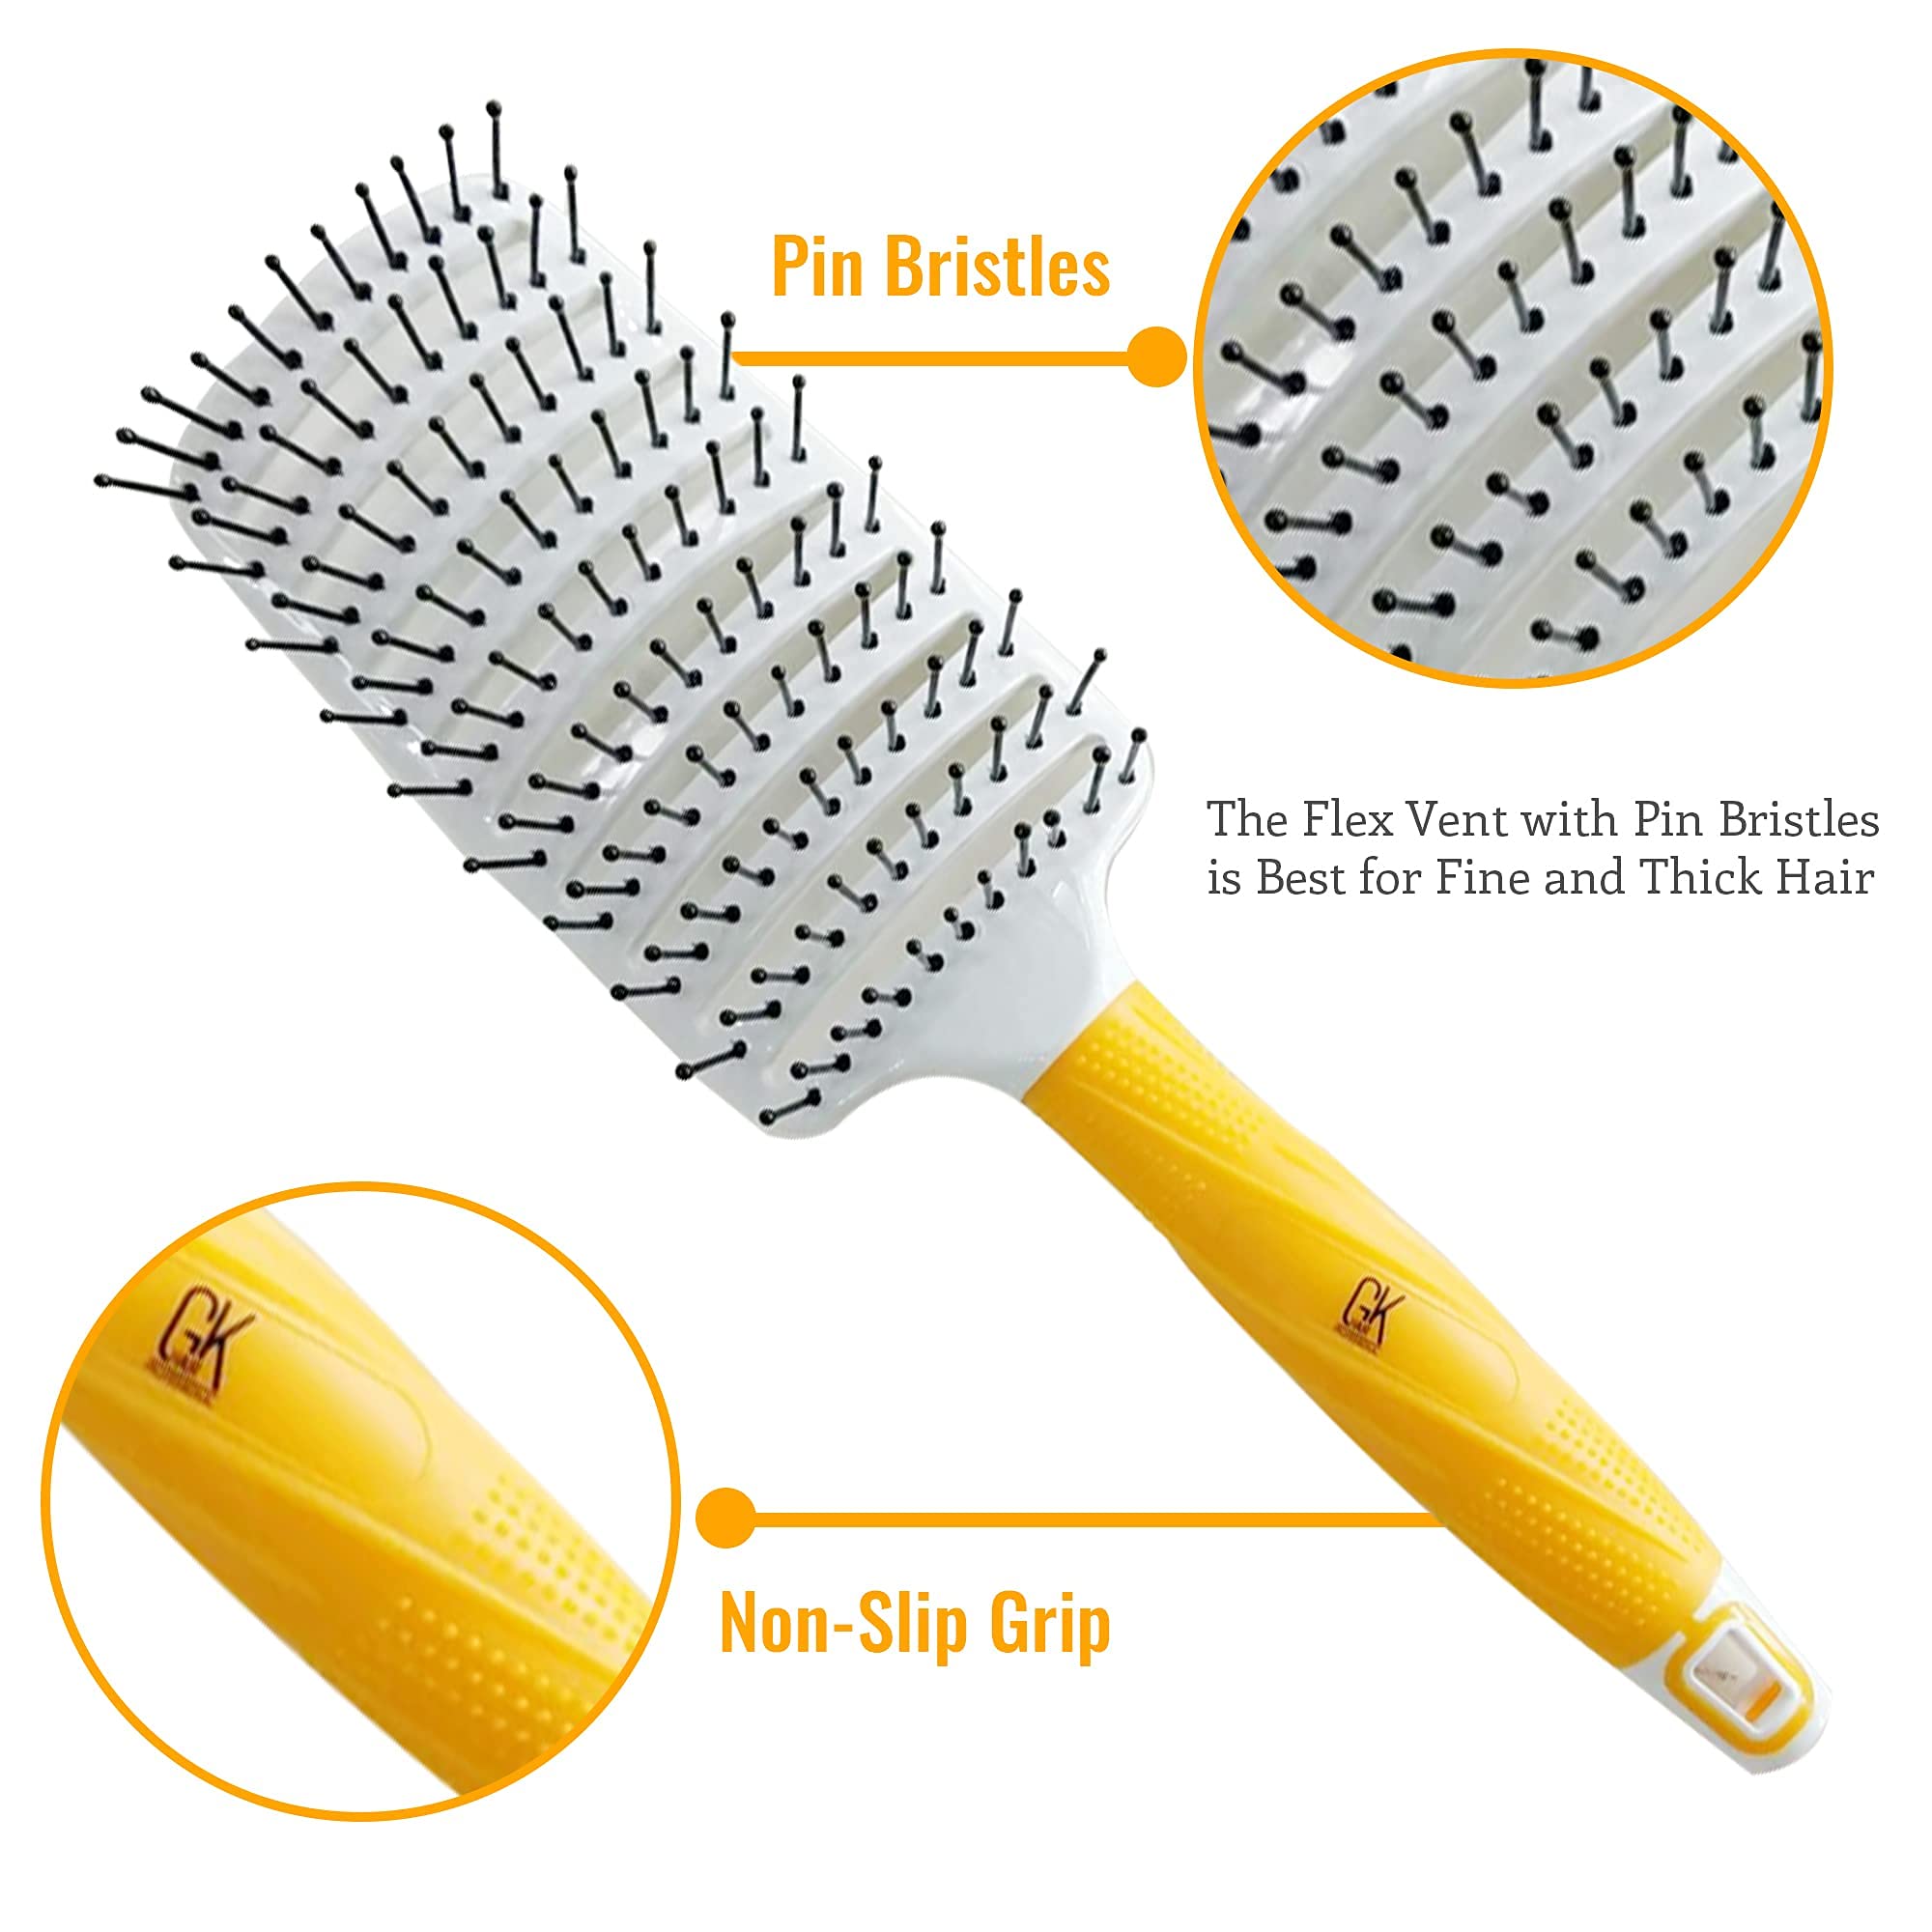 Global Keratin GK Hair Moisturizing Shampoo and Conditioner Set 300ml I Vent Brush (2.5 Inch) Rubber Handle